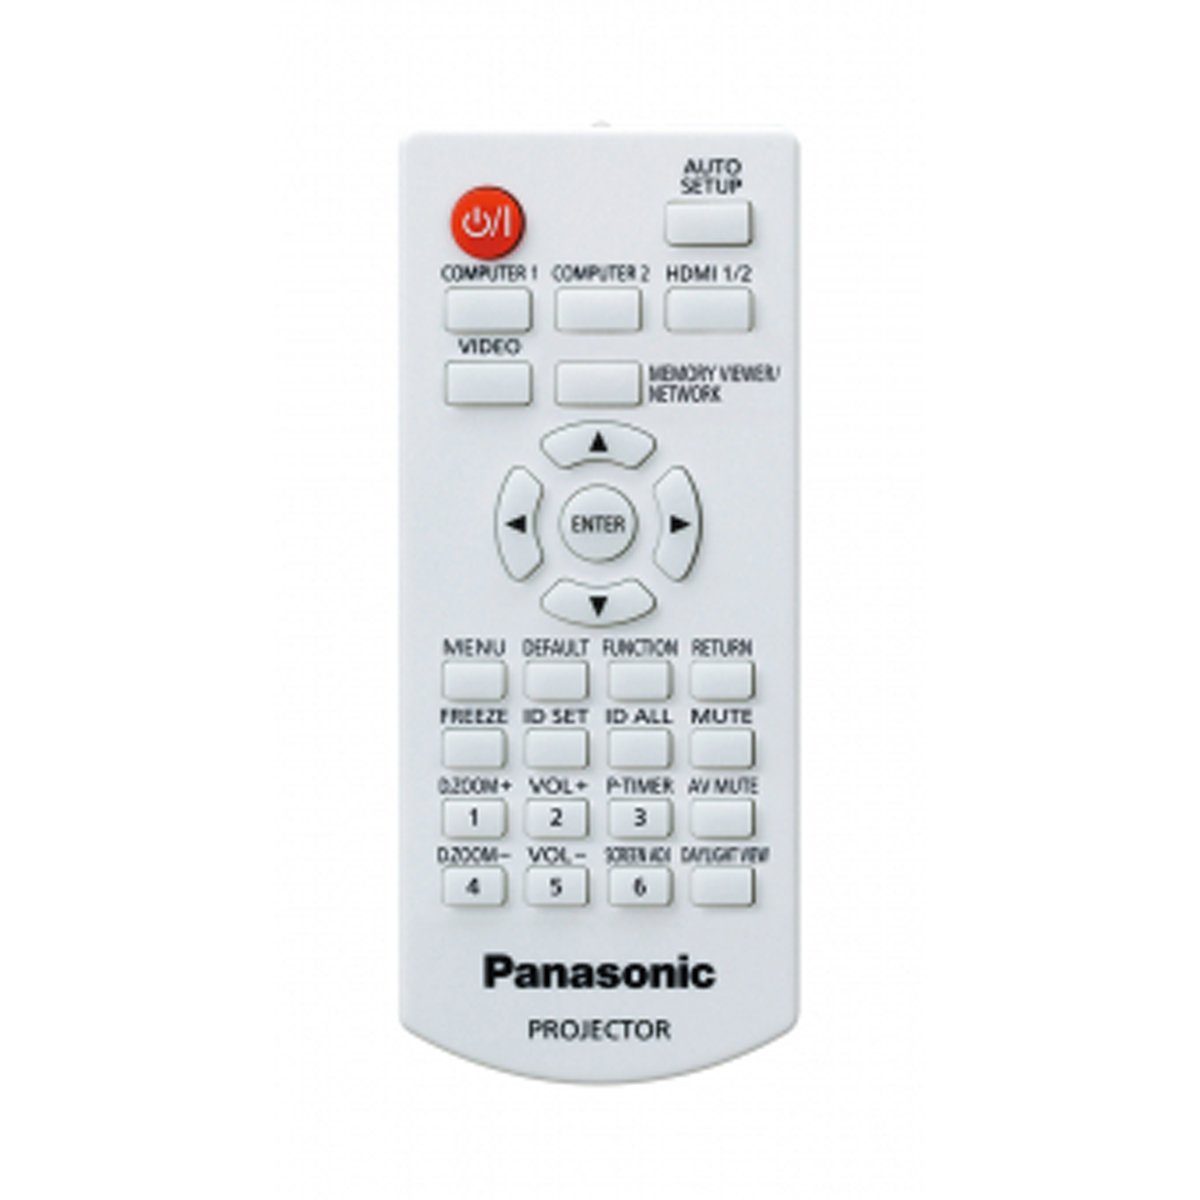 x PT-TX440 px) lm, 768 (3800 16000:1, 1024 Panasonic Beamer